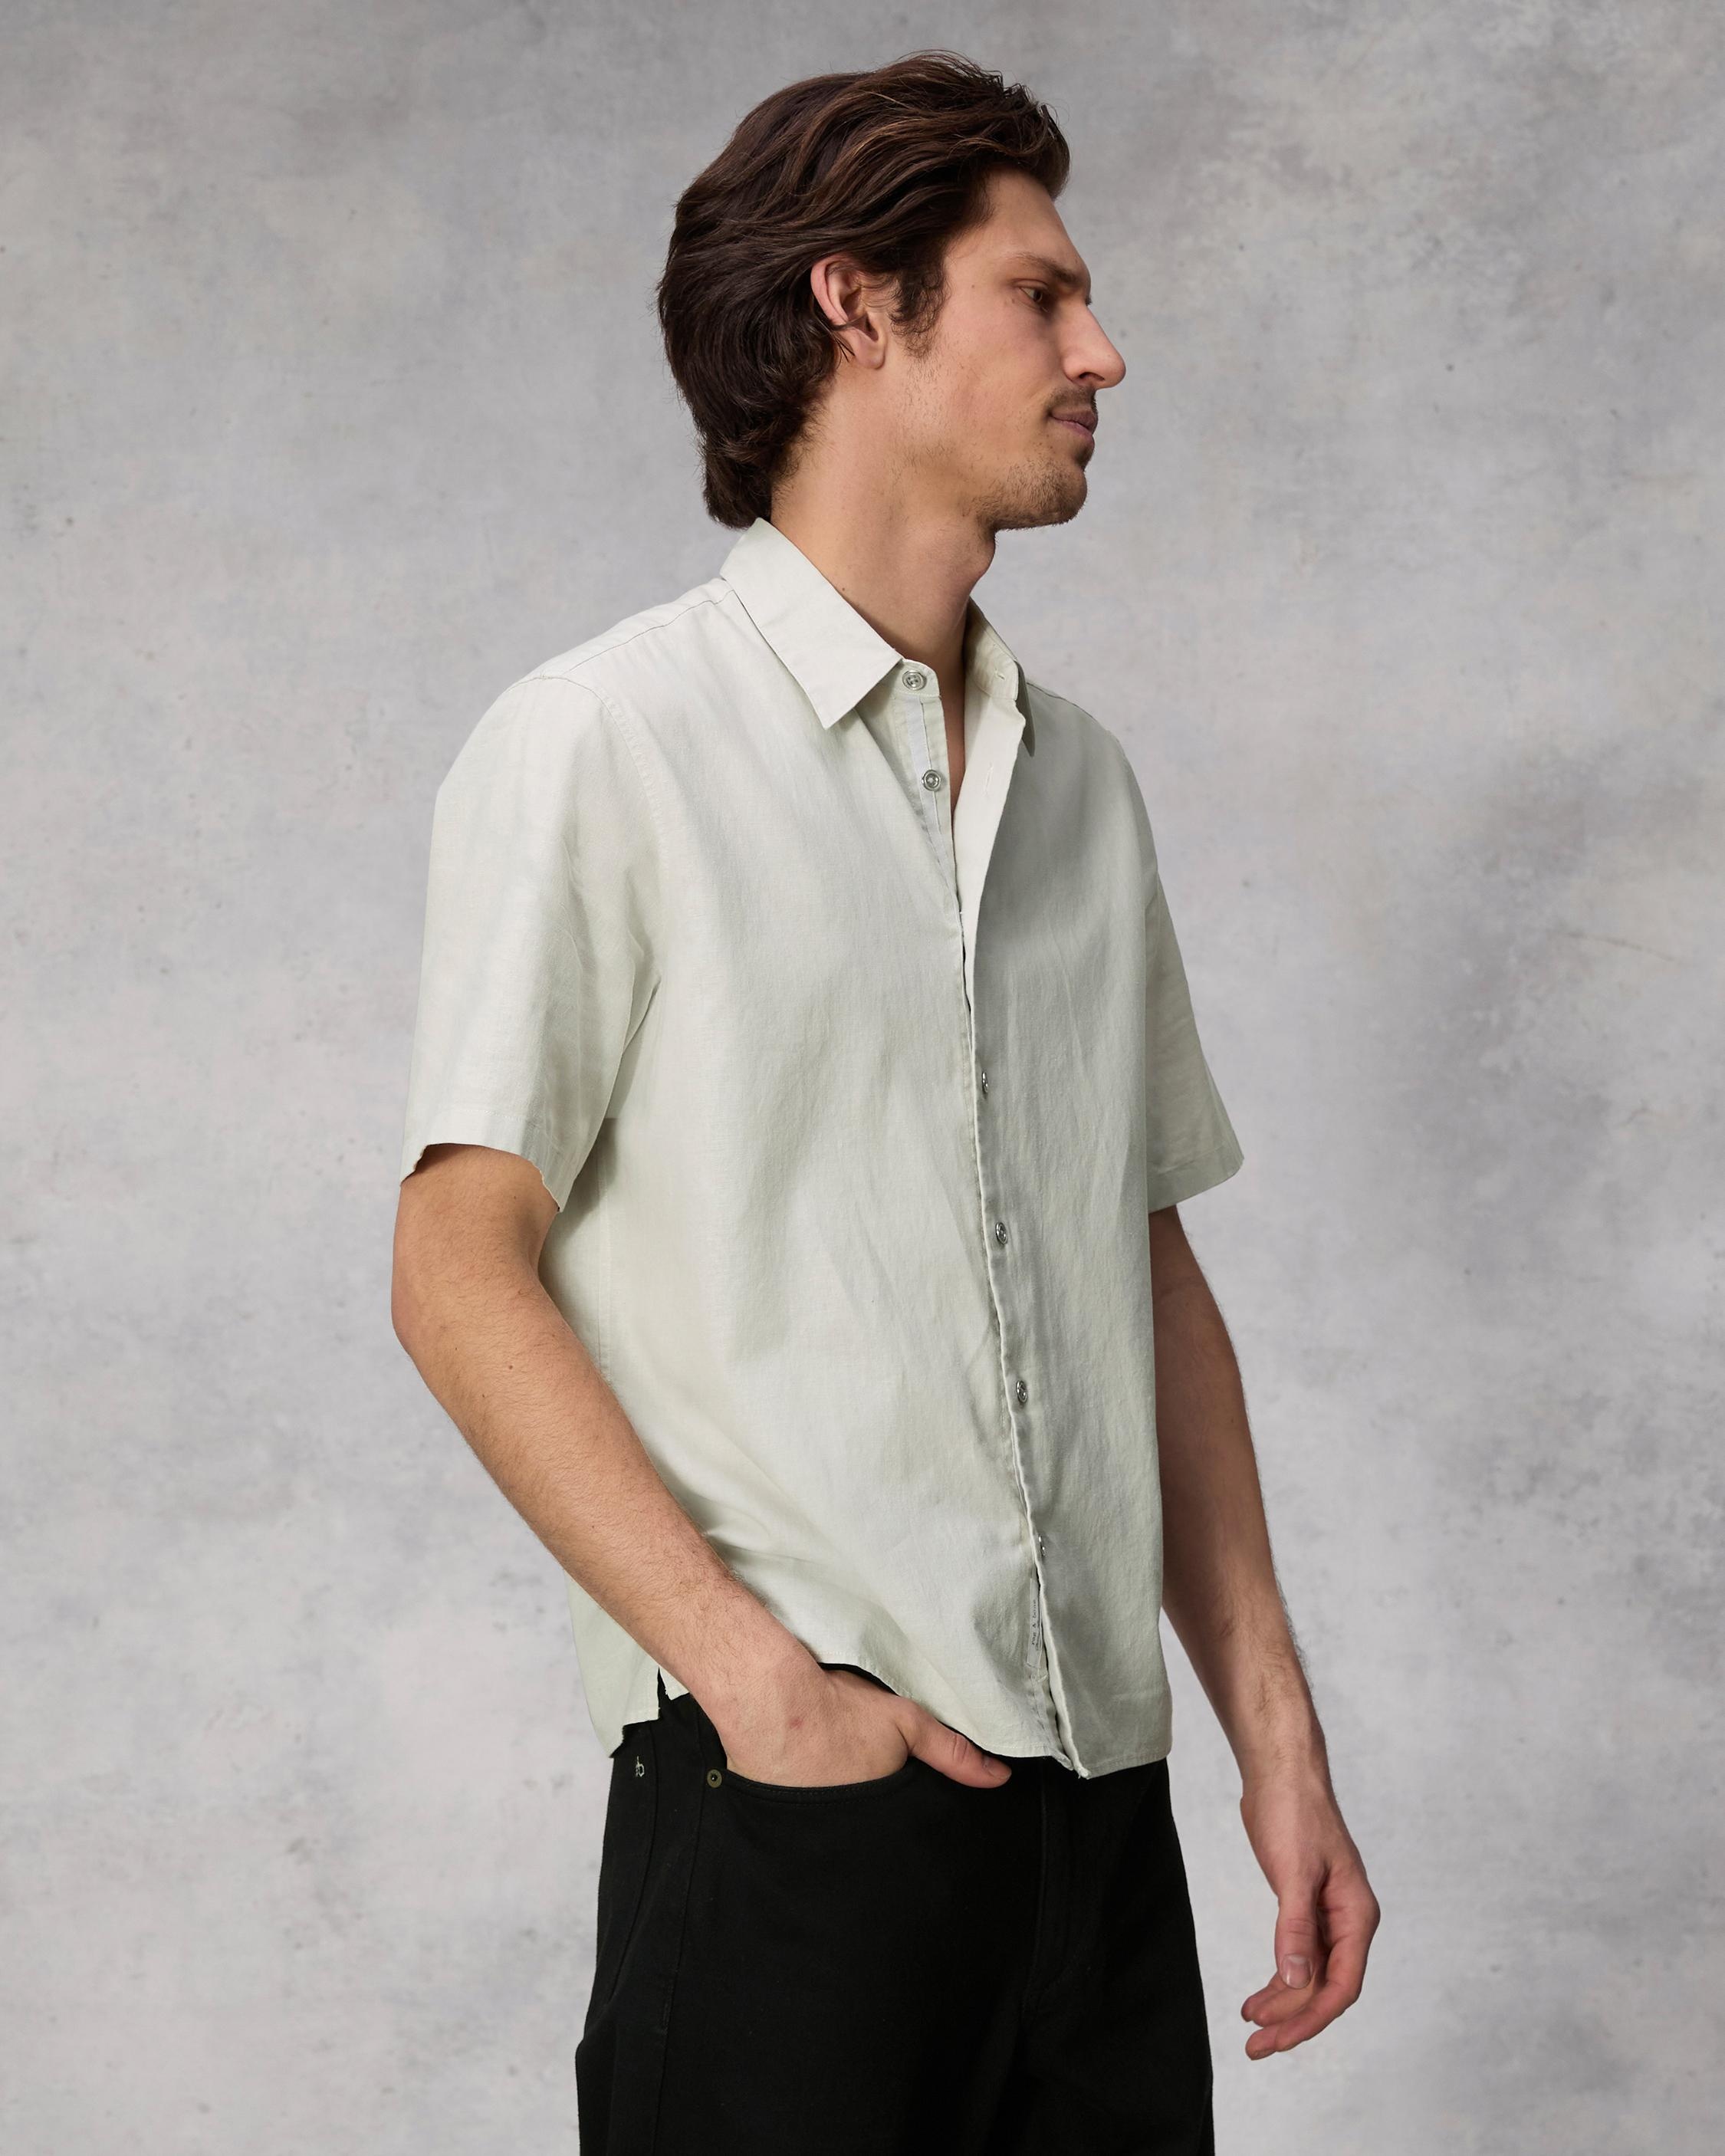 Dalton Cotton Hemp Shirt
Relaxed Fit Button Down - 4